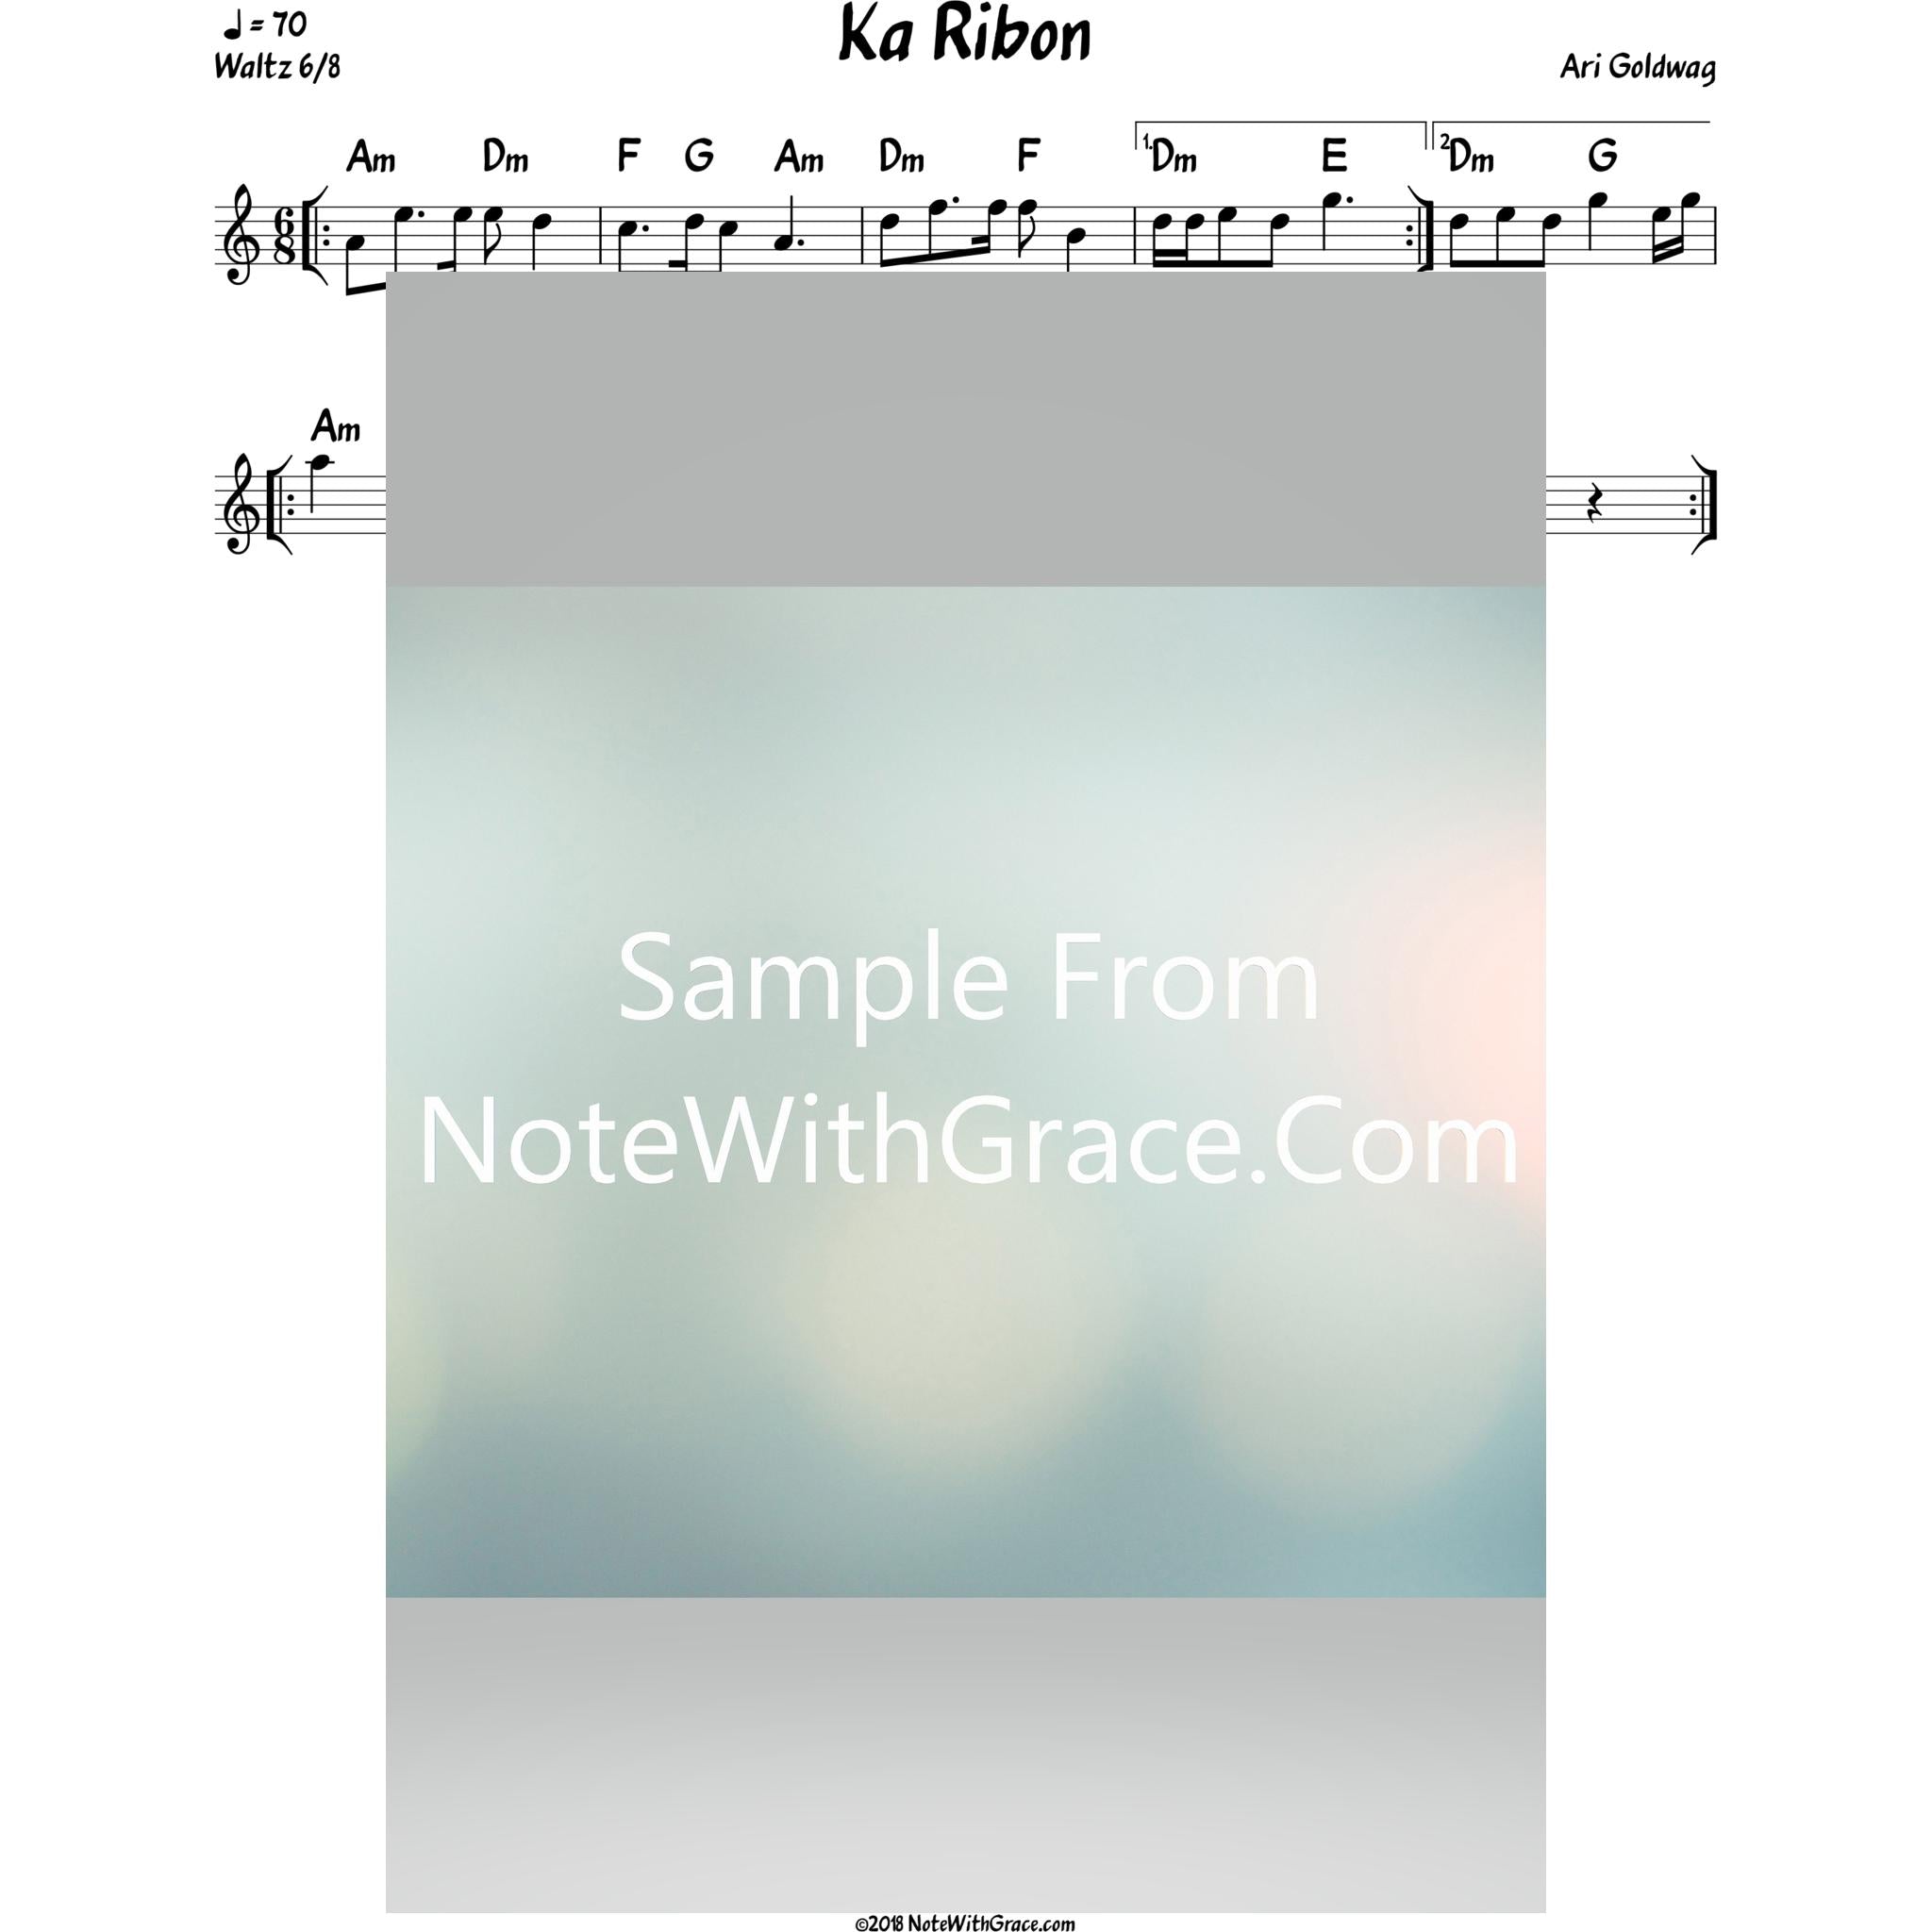 Ka Ribon Lead Sheet (Ari Goldwag)-Sheet music-NoteWithGrace.com